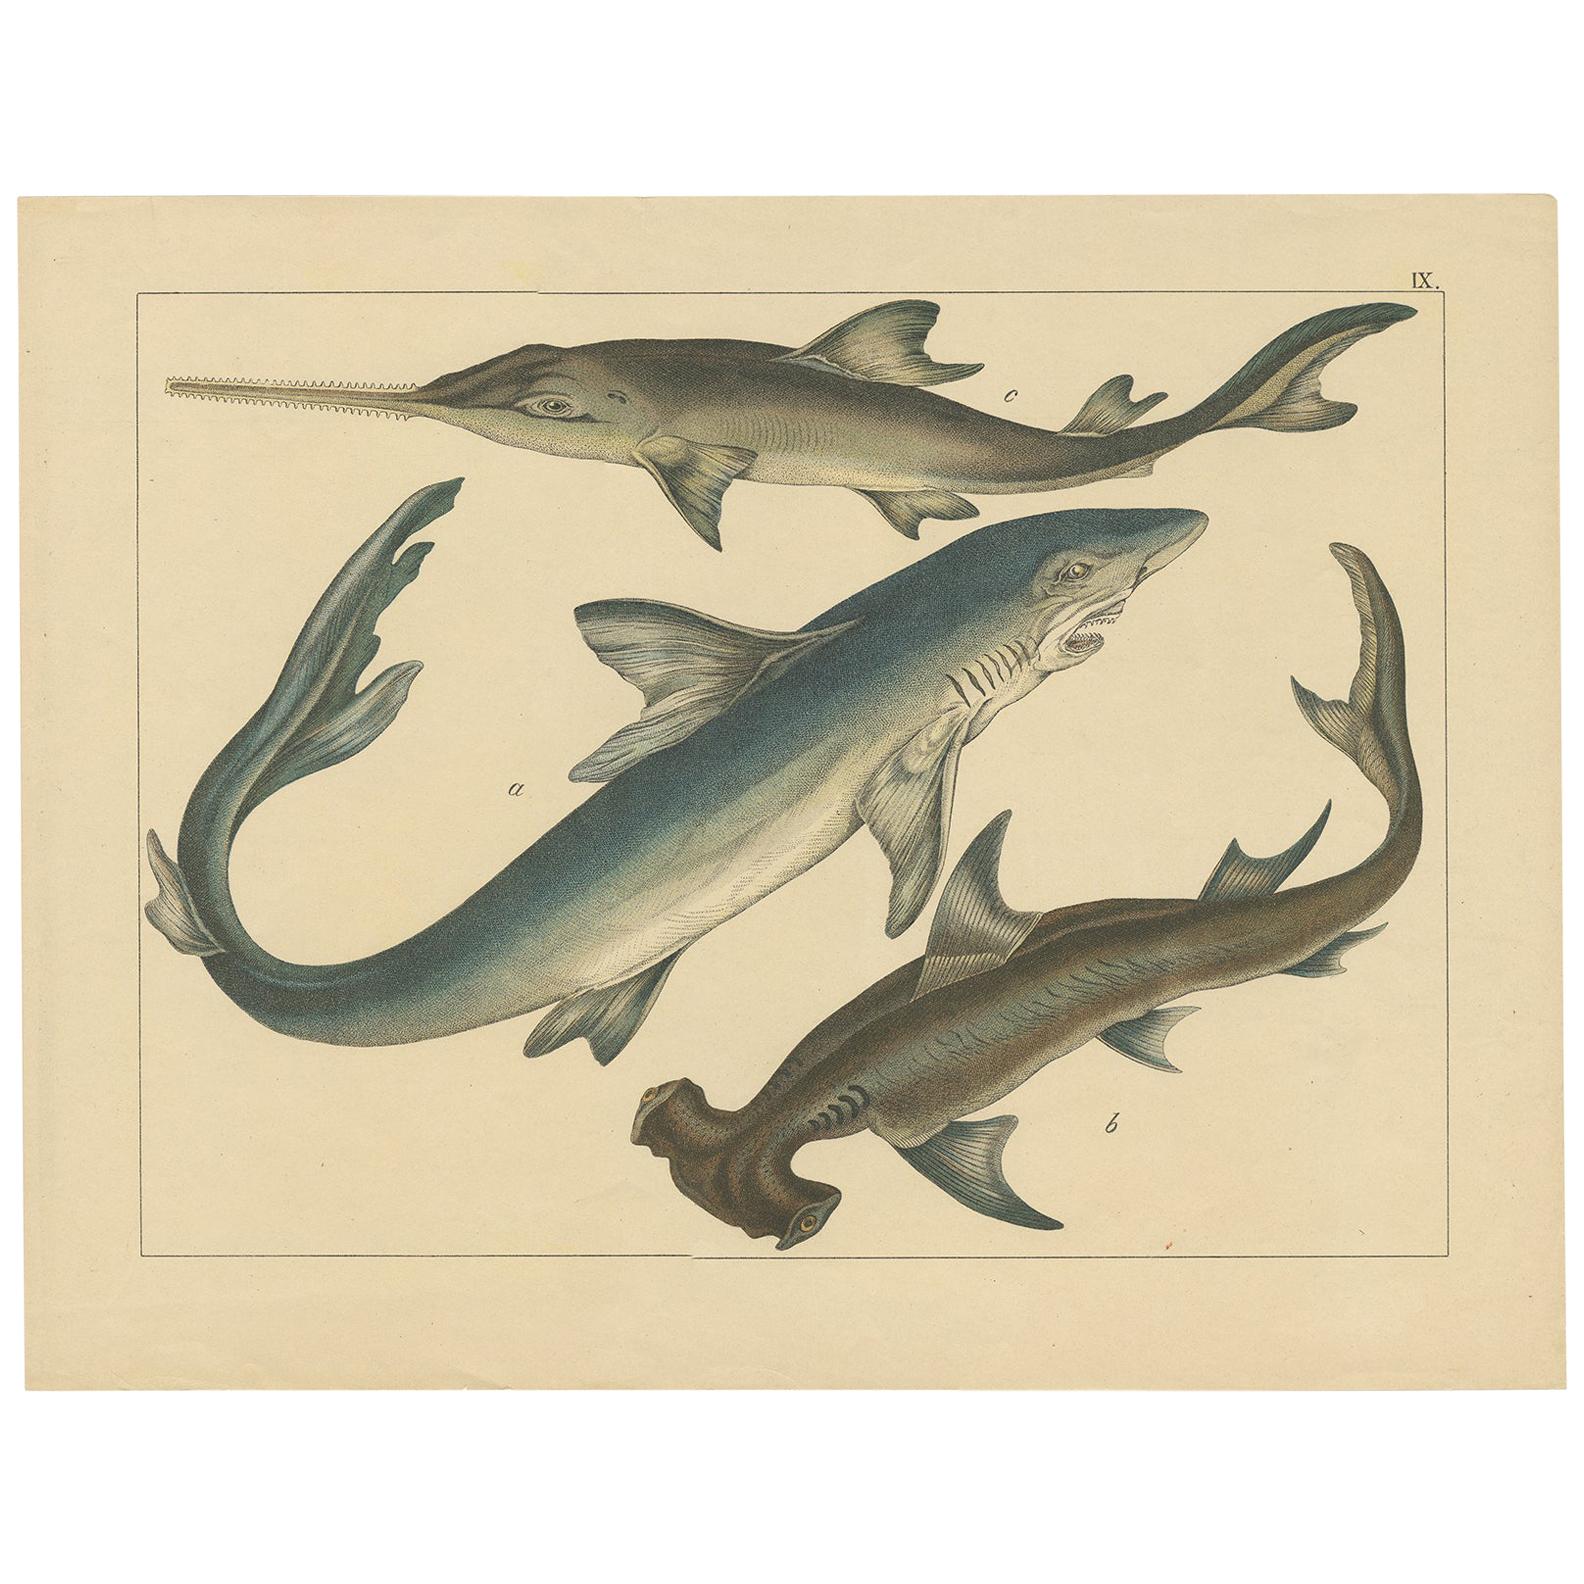 Antique Fish Print of Shark species by Schubert, circa 1875